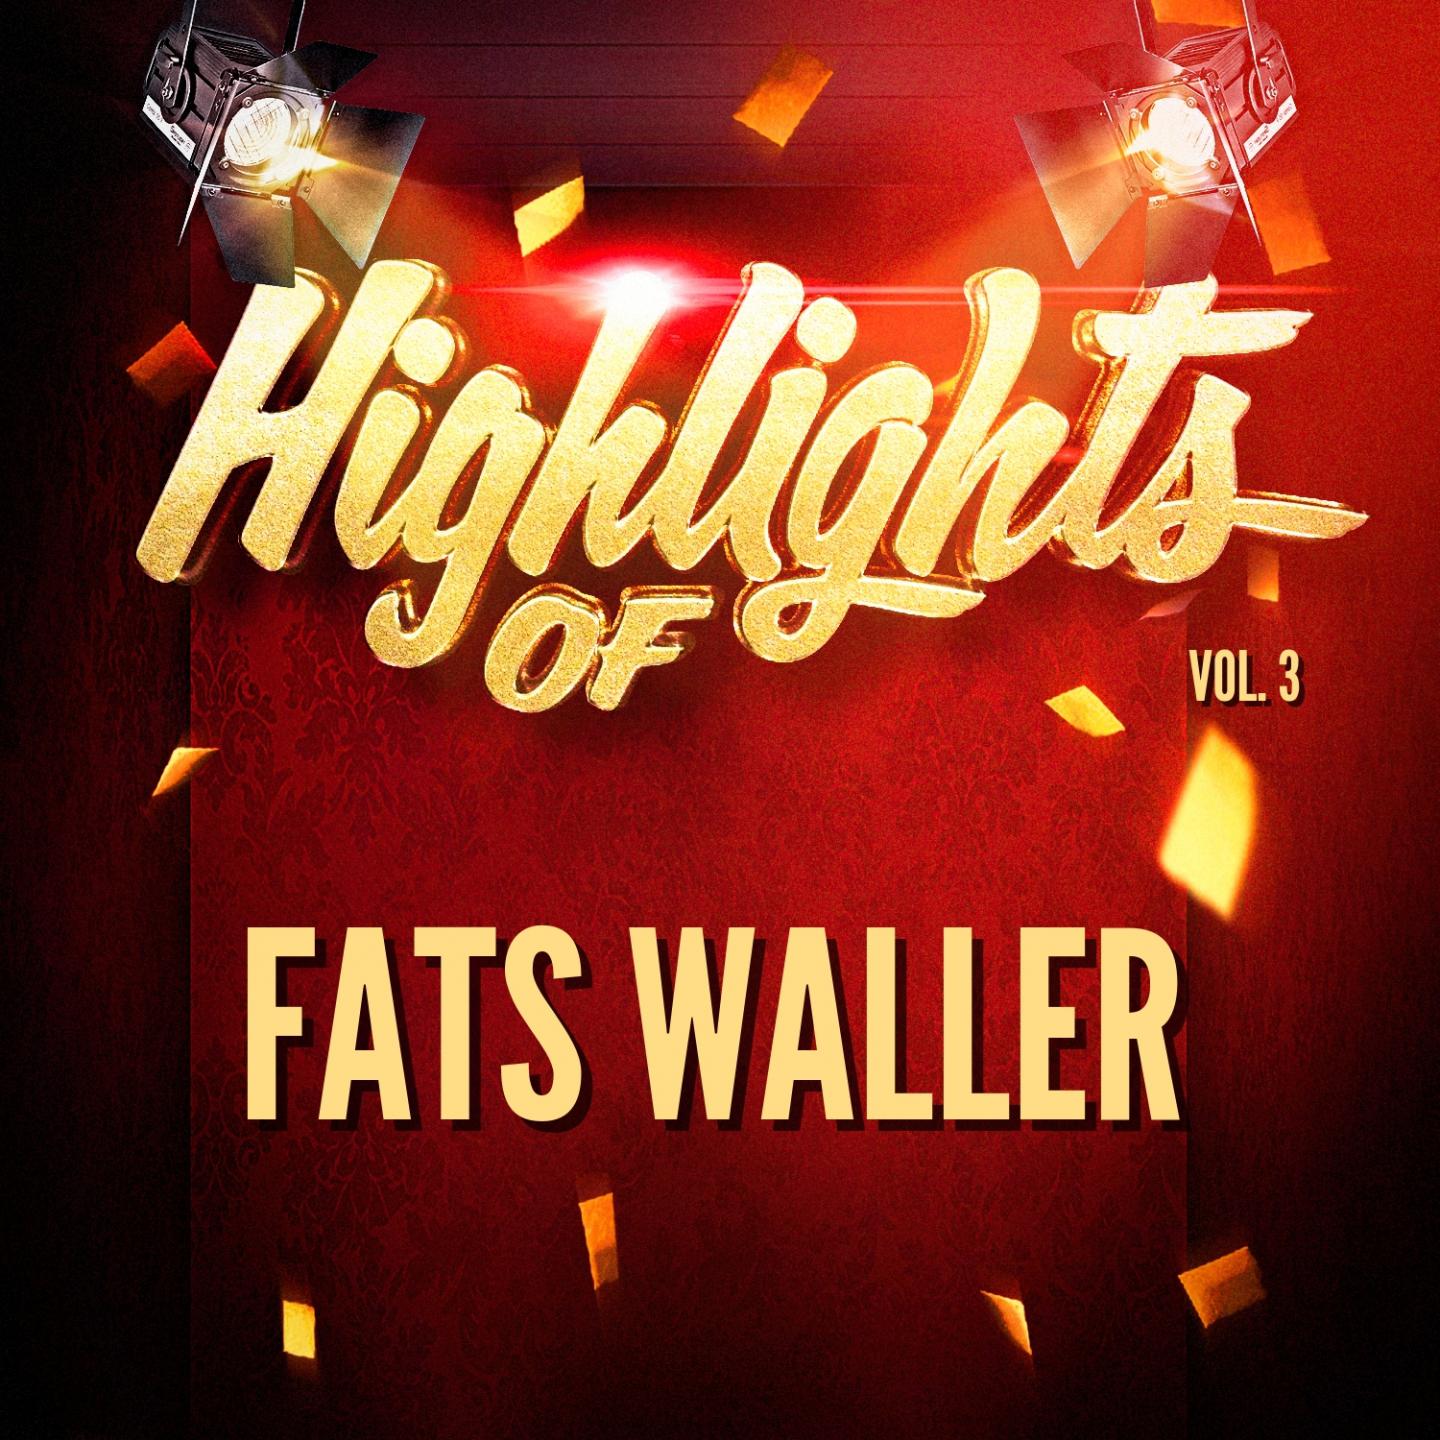 Highlights of Fats Waller, Vol. 3